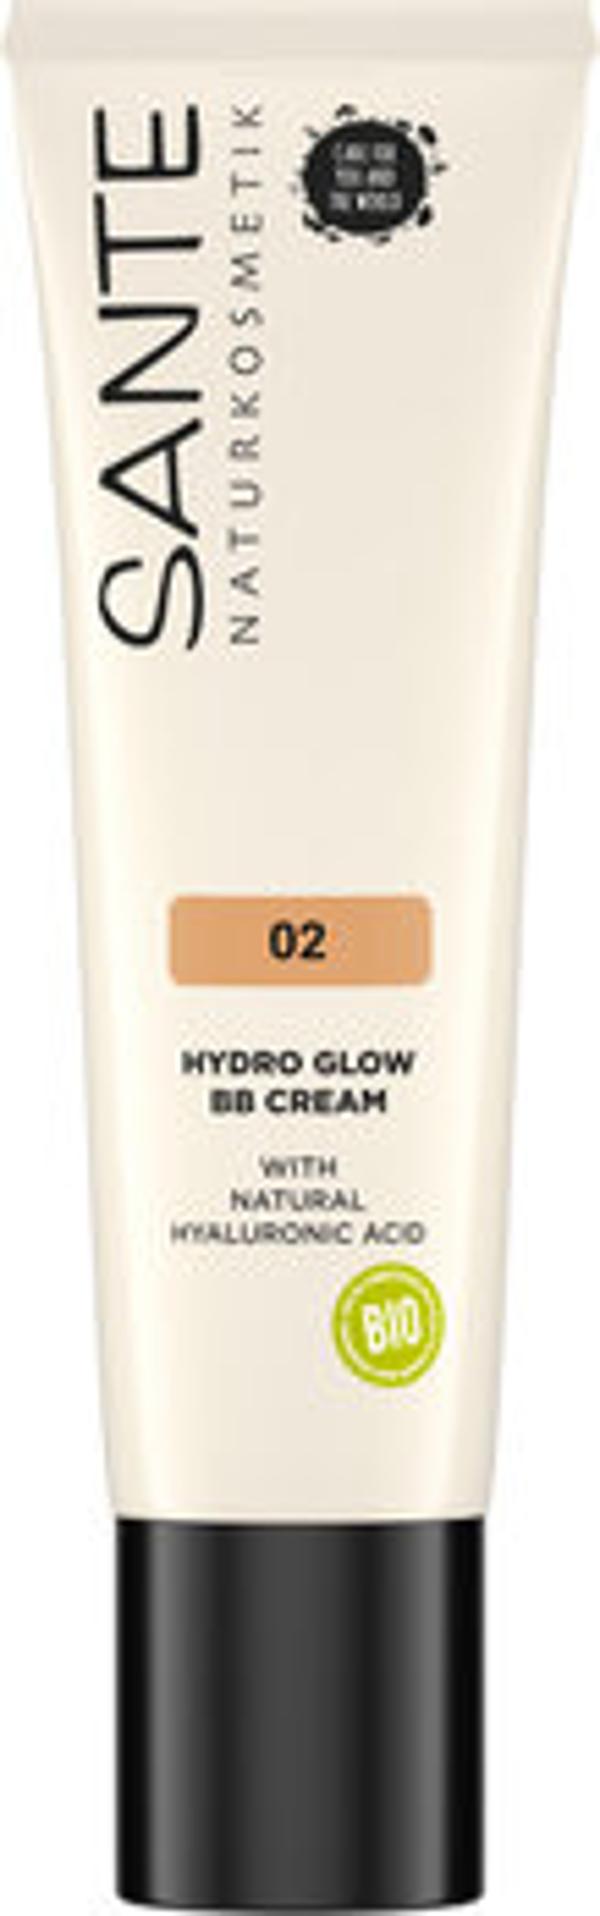 Produktfoto zu Hydro Glow BB Cream 02 Medium-Dark 30ml